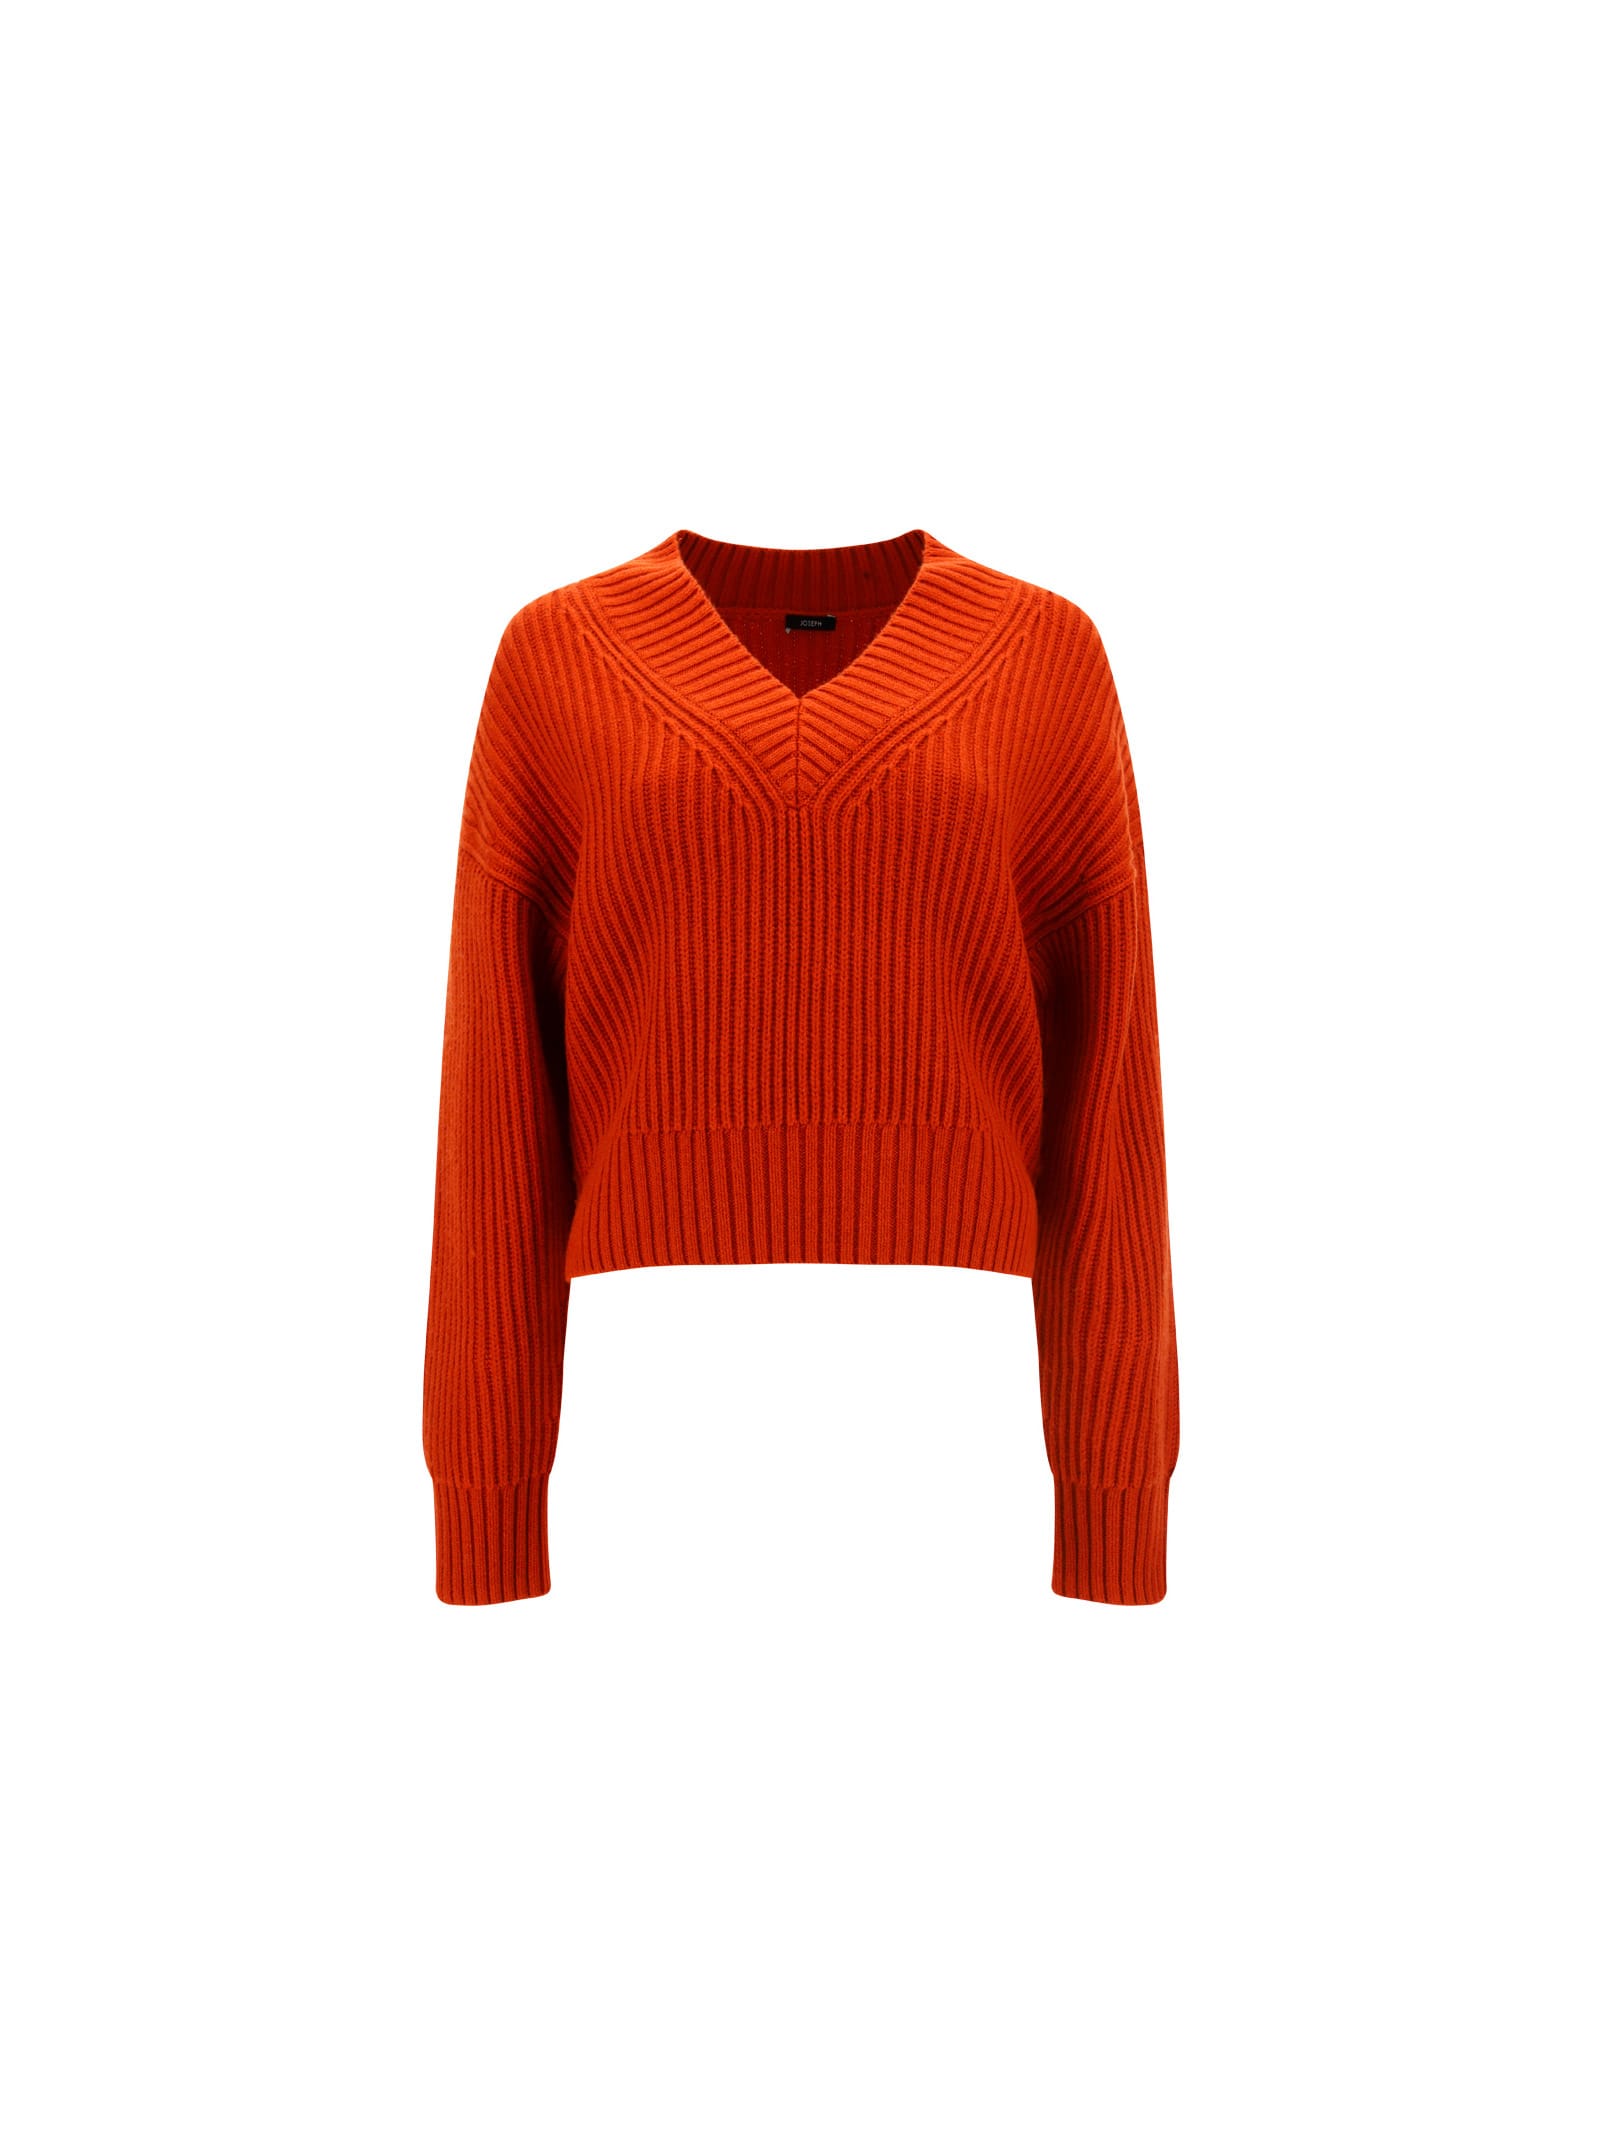 Joseph Luxe Sweater